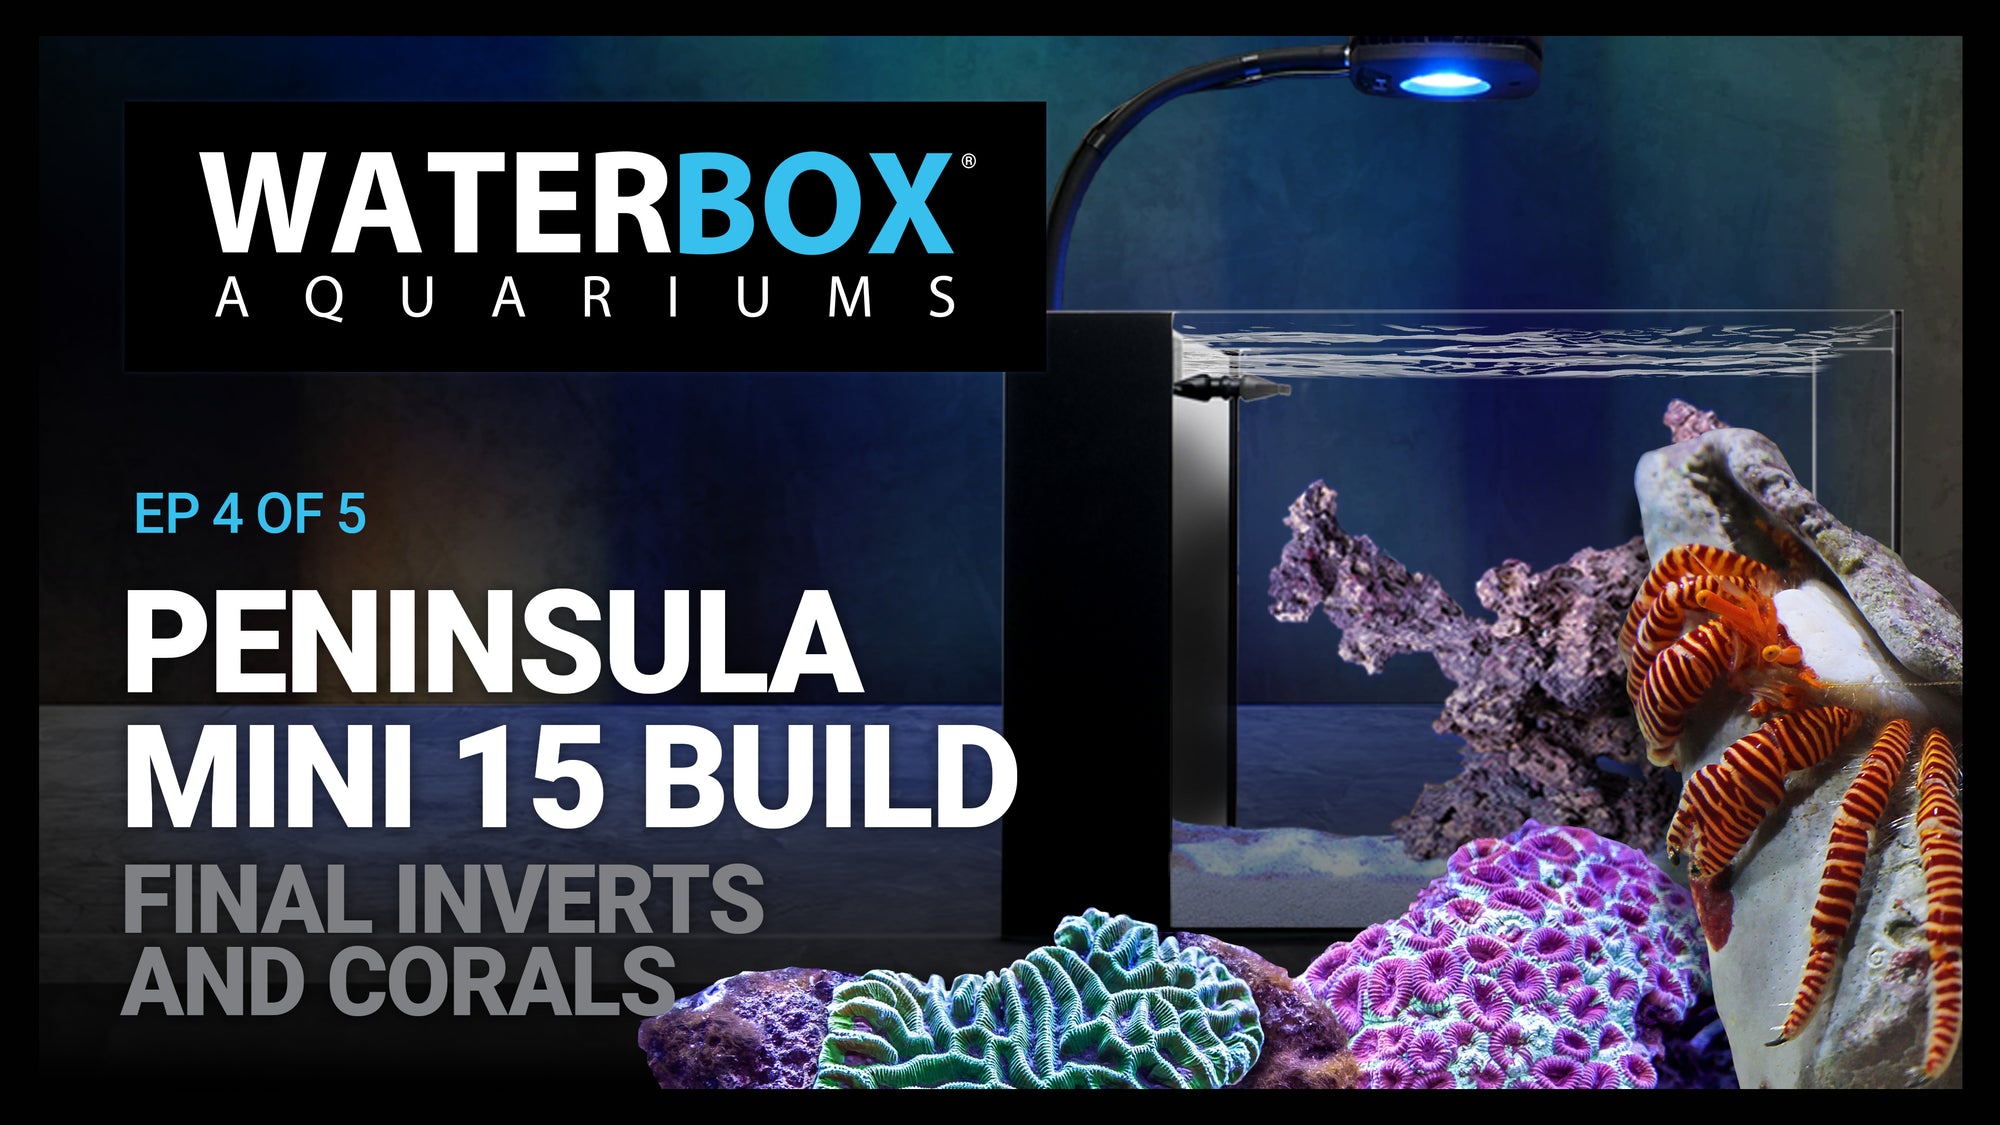 Peninsula Mini 15 Build. Final inverts and corals.